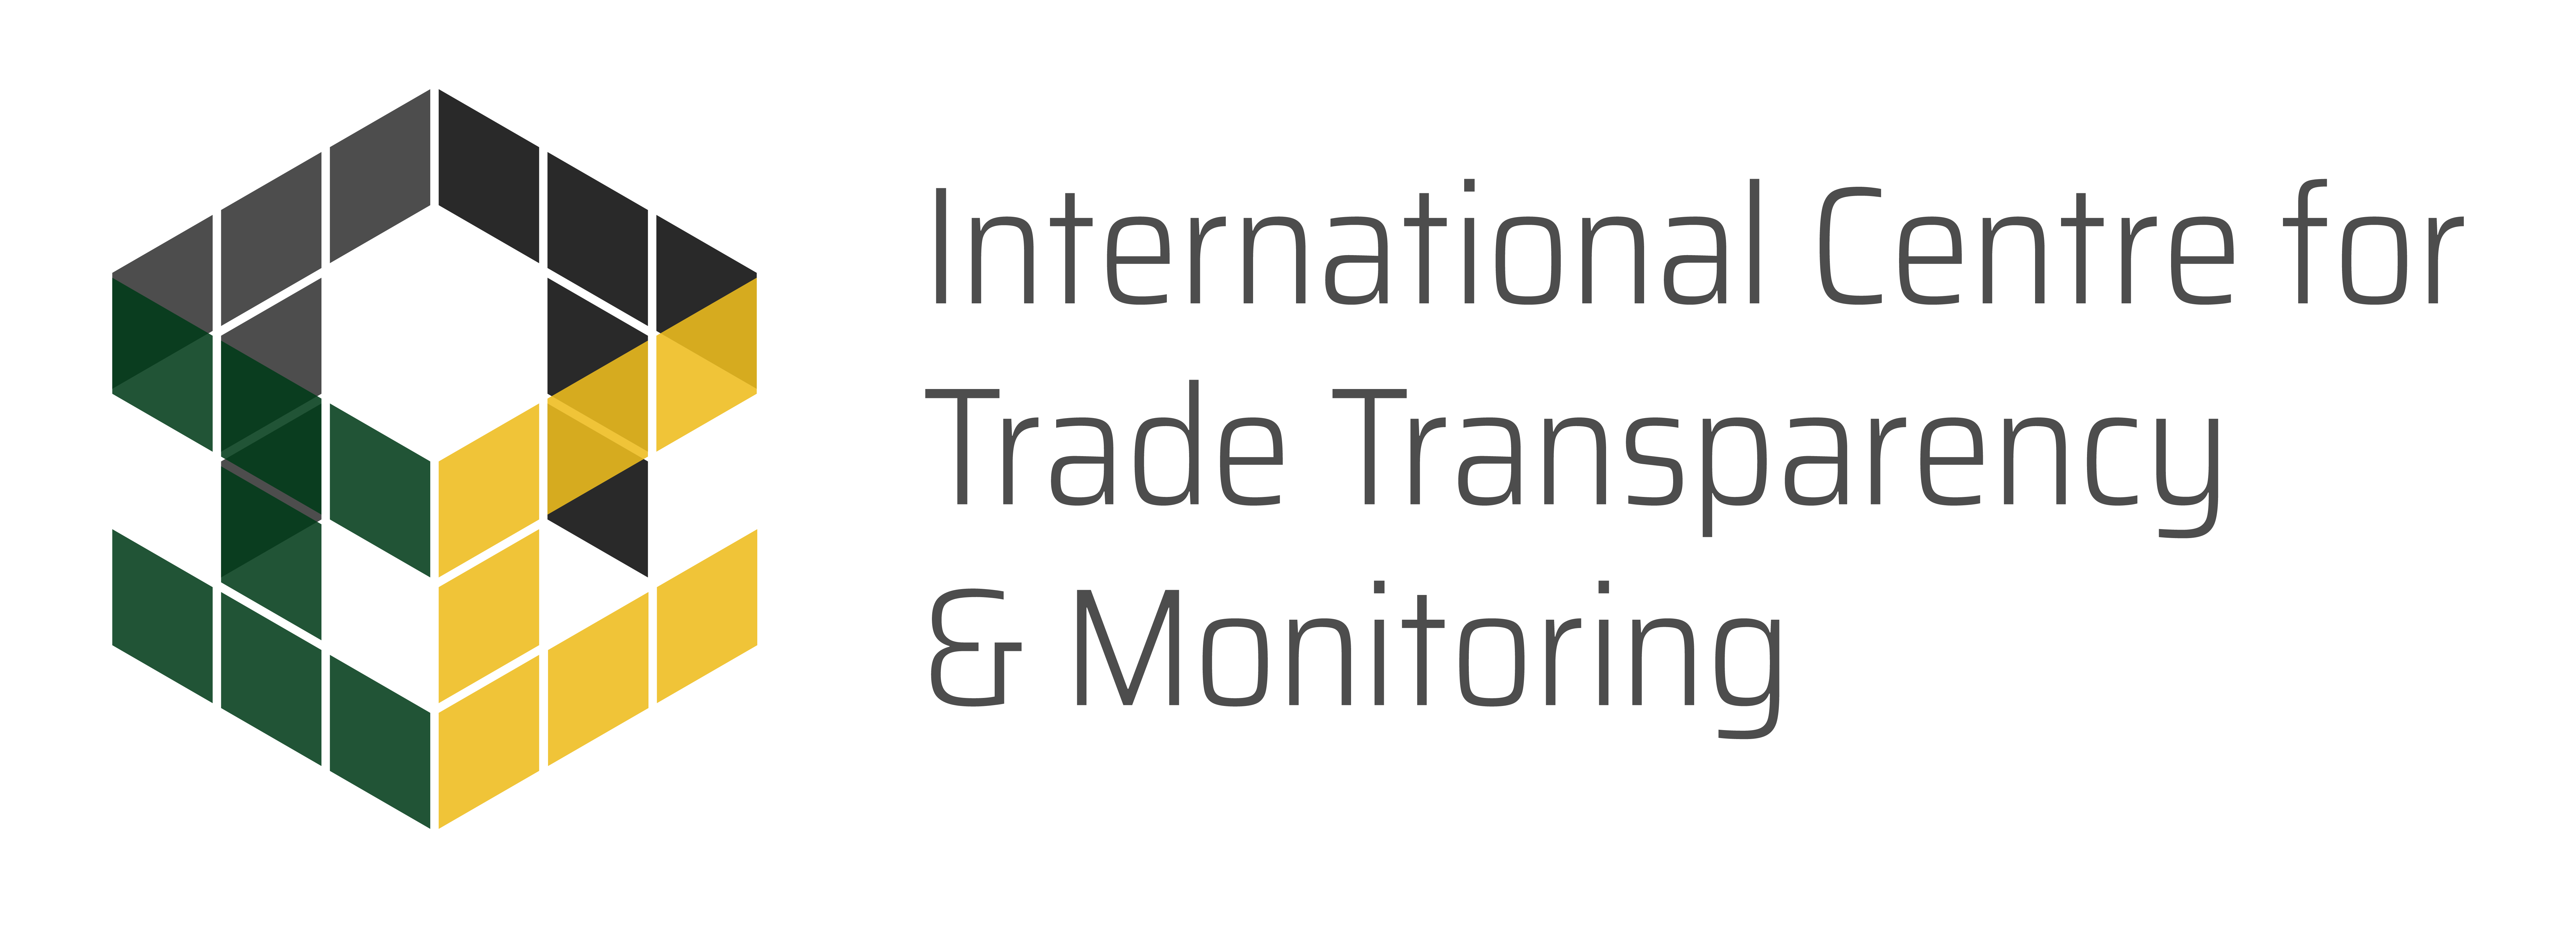 International Centre for Trade Transparency